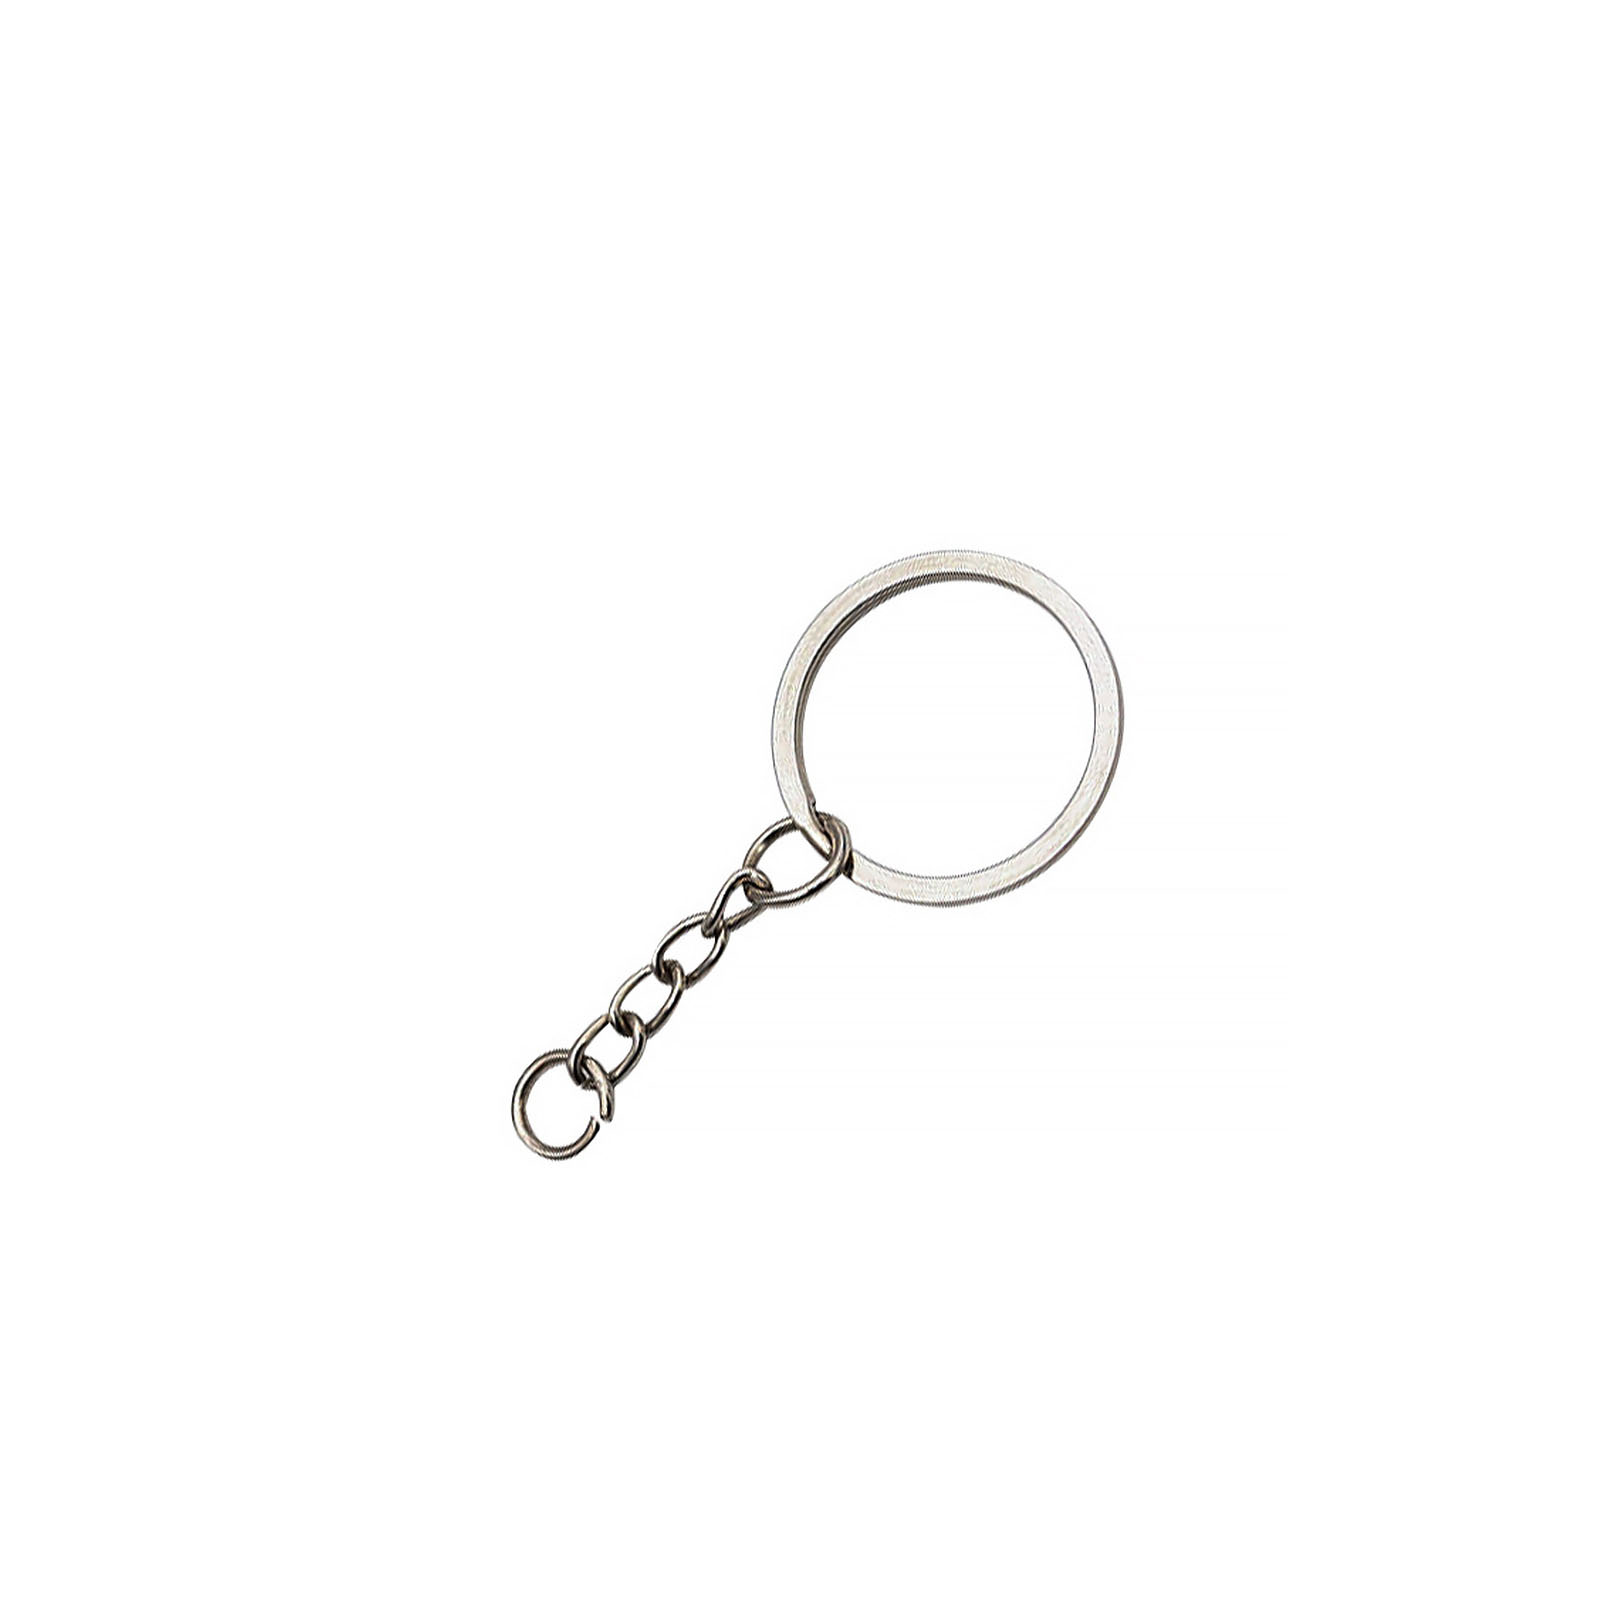 2.5 cm key chain (nickel color)